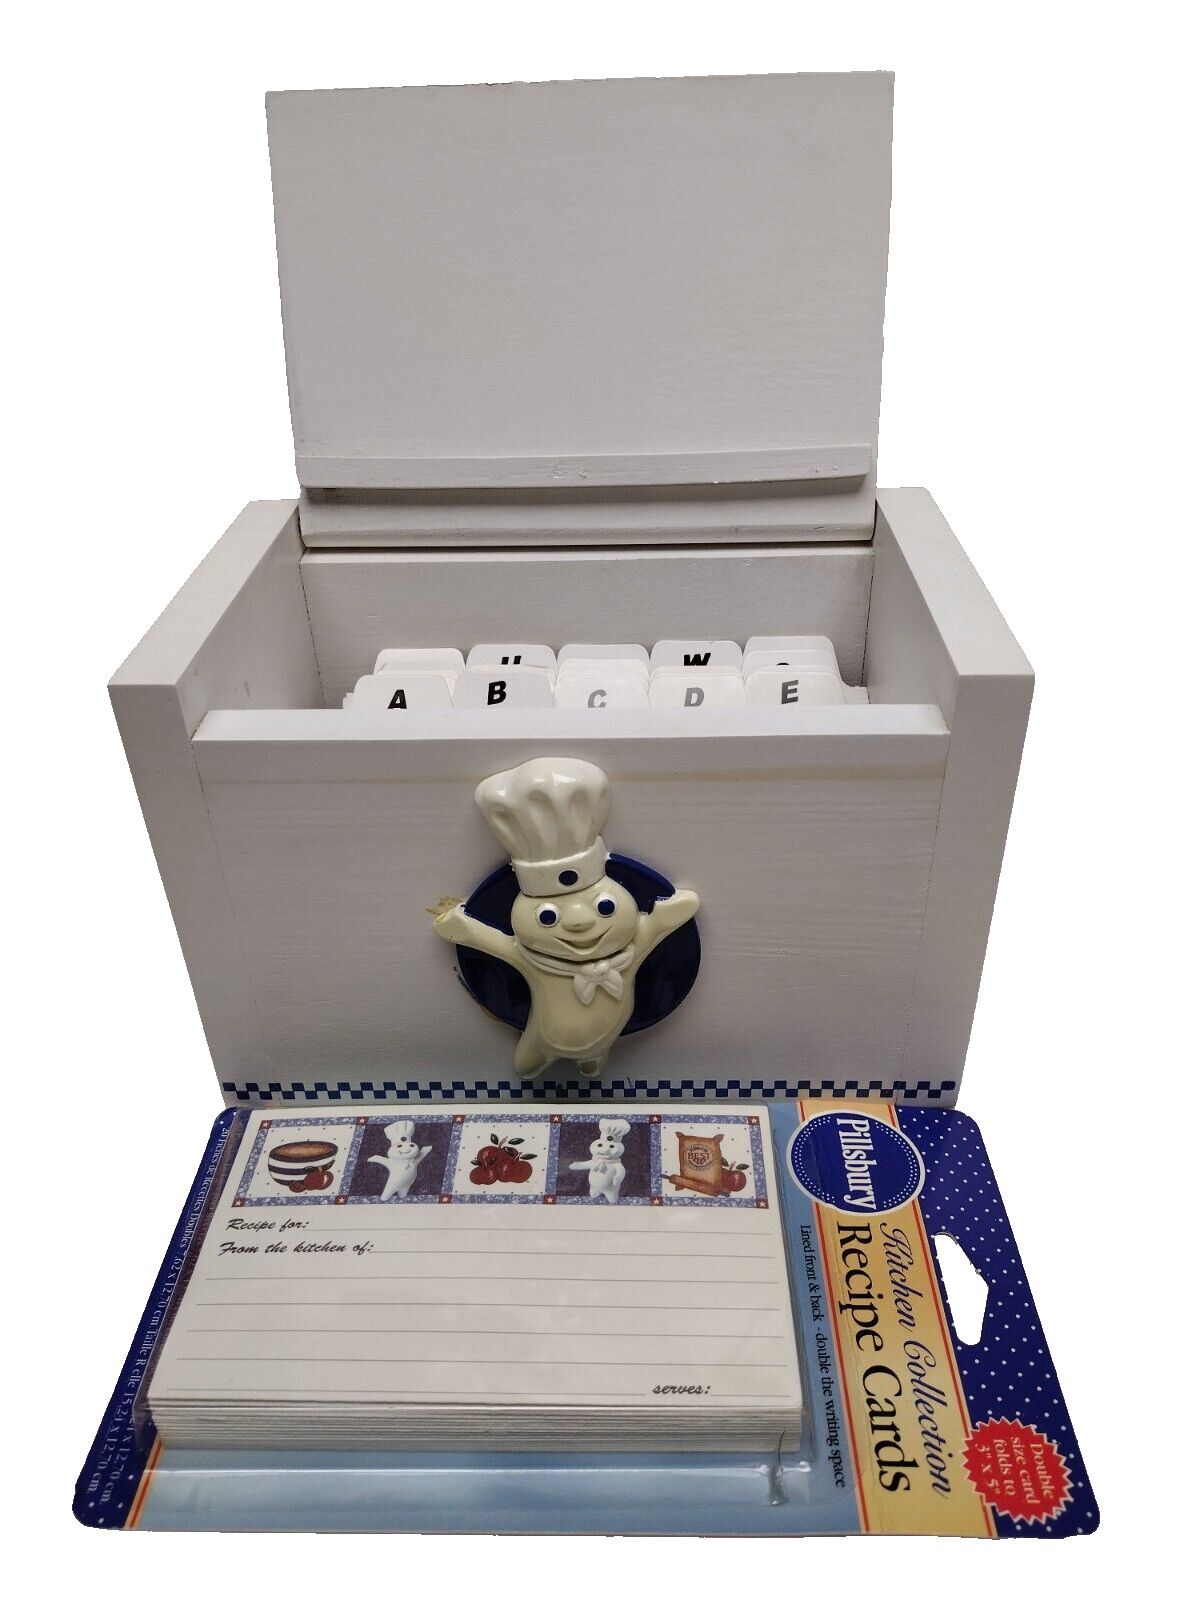 Pillsbury Doughboy RECIPE CARD BOX POPPIN\' FRESH WOODEN/CERAMIC HOLDER 2004